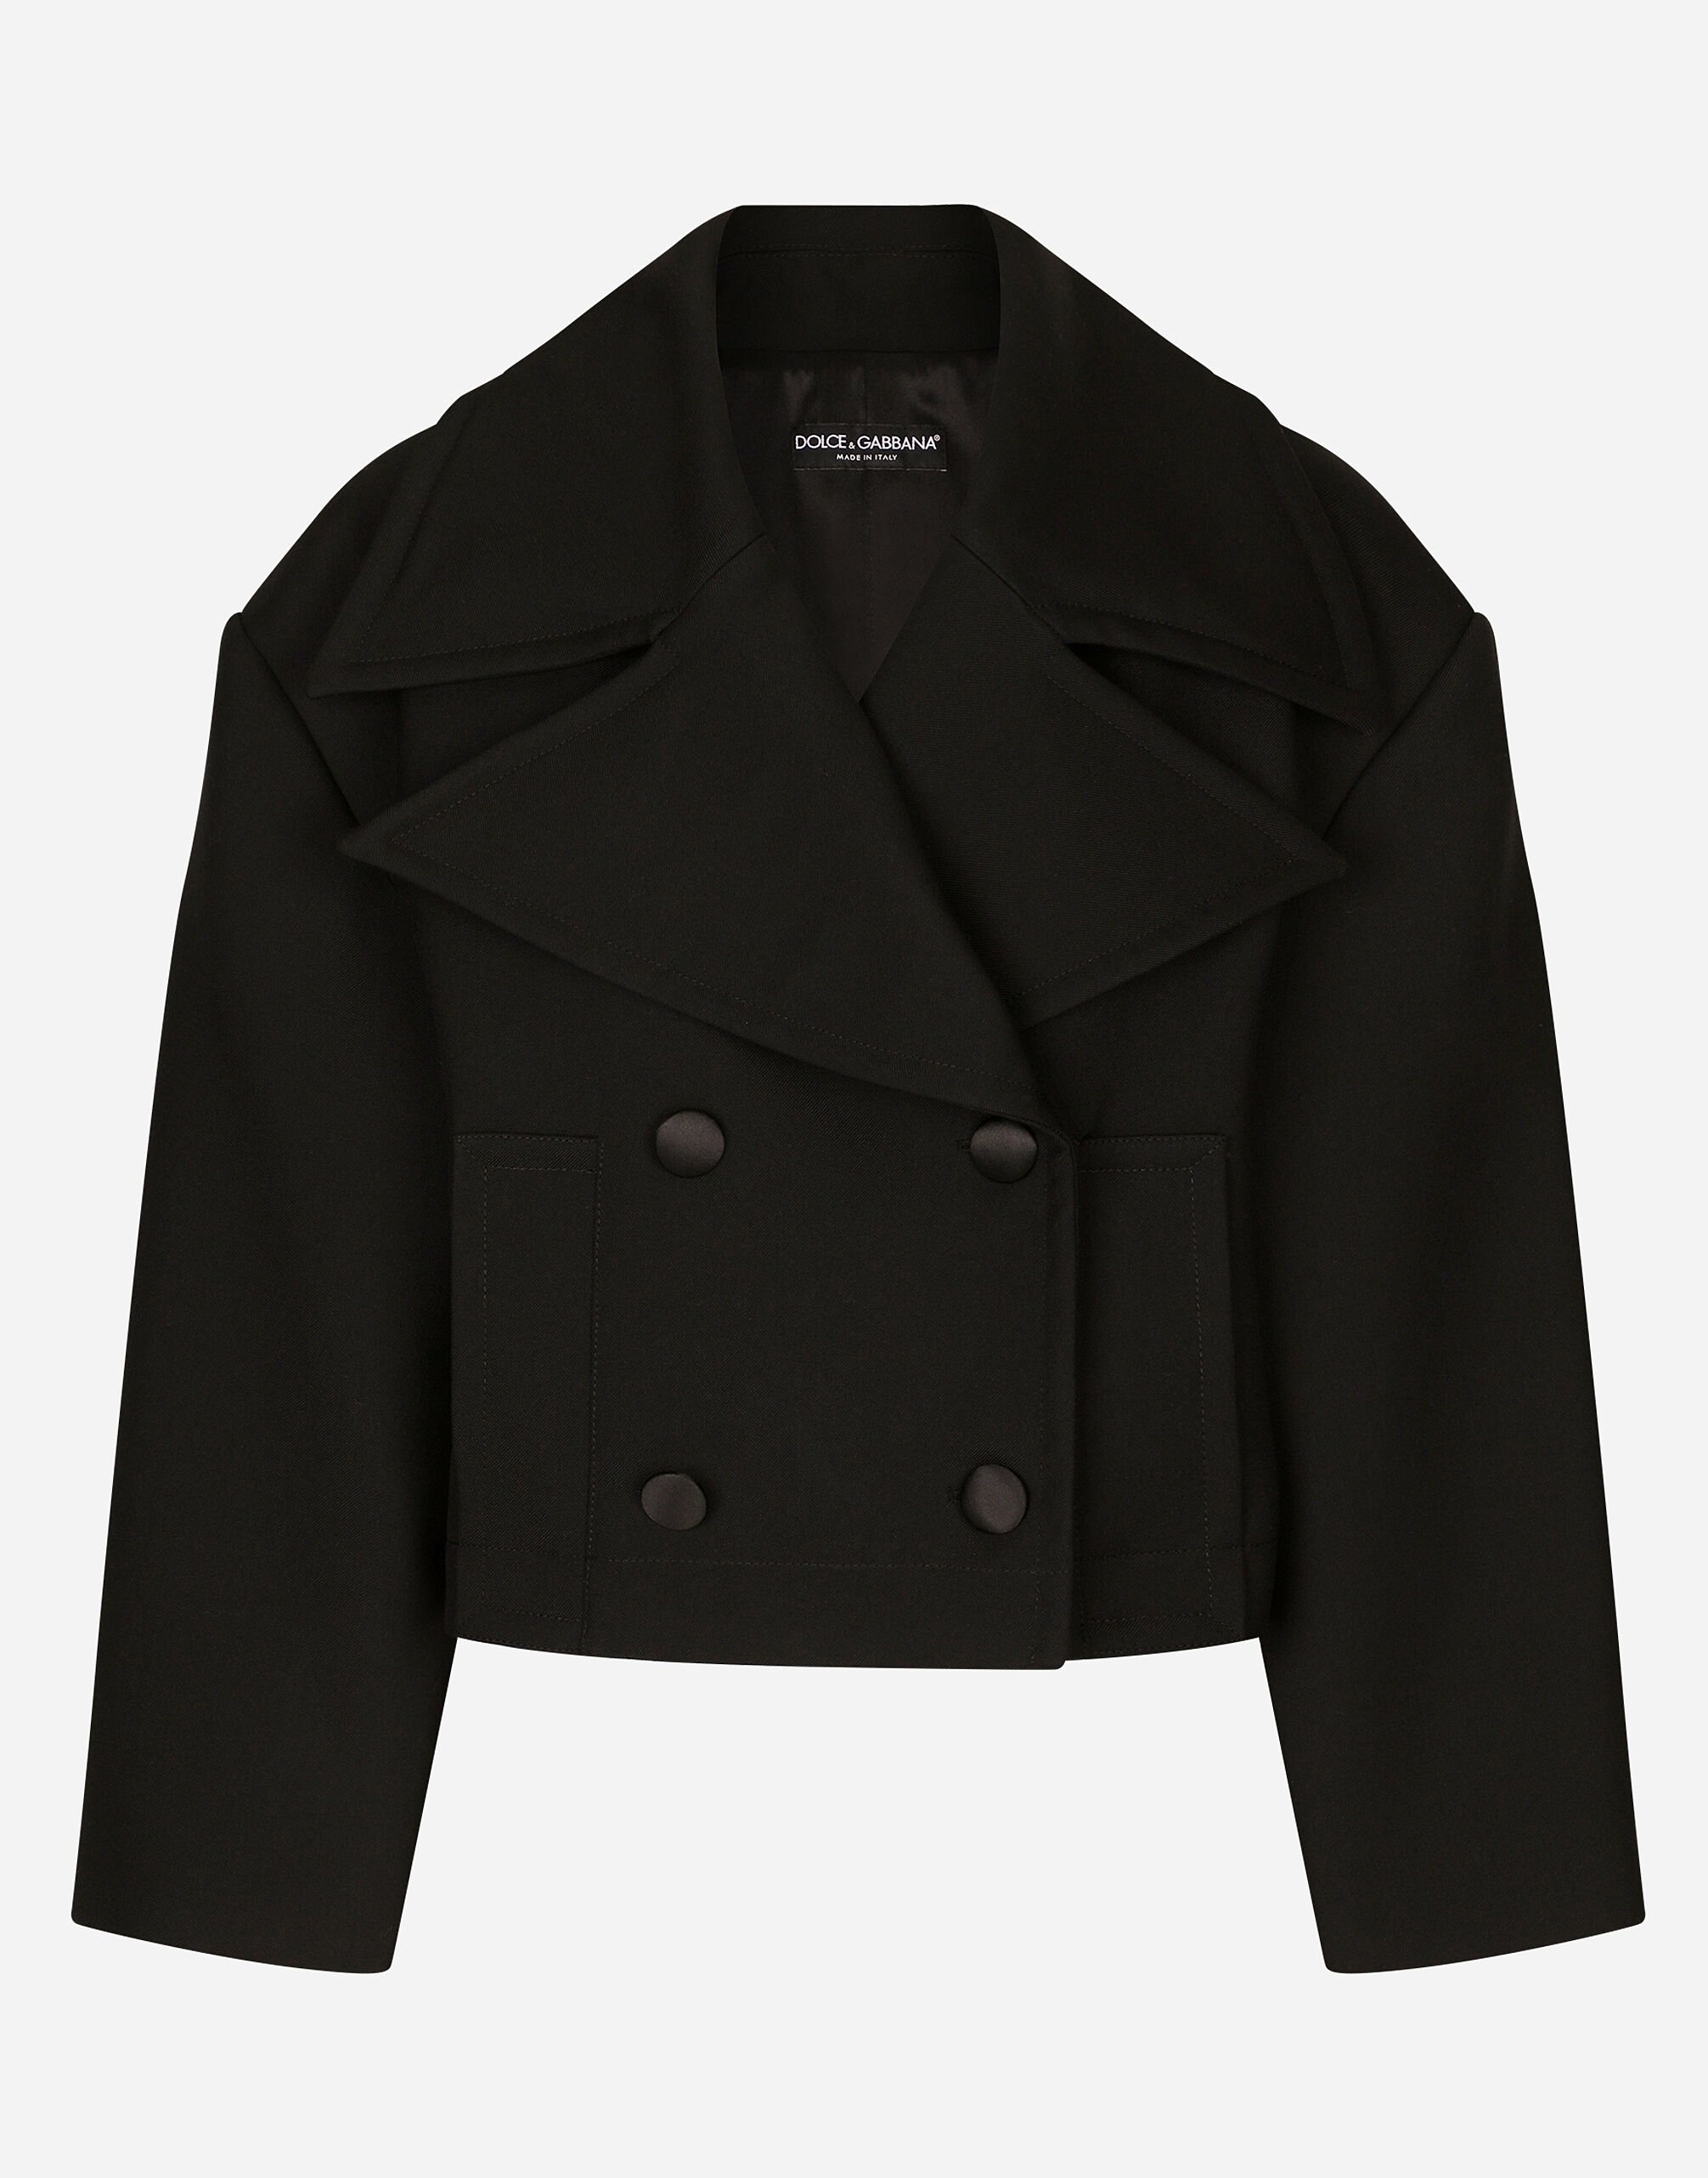 Dolce & Gabbana Short oversize wool gabardine jacket Black F0D1OTFUMG9